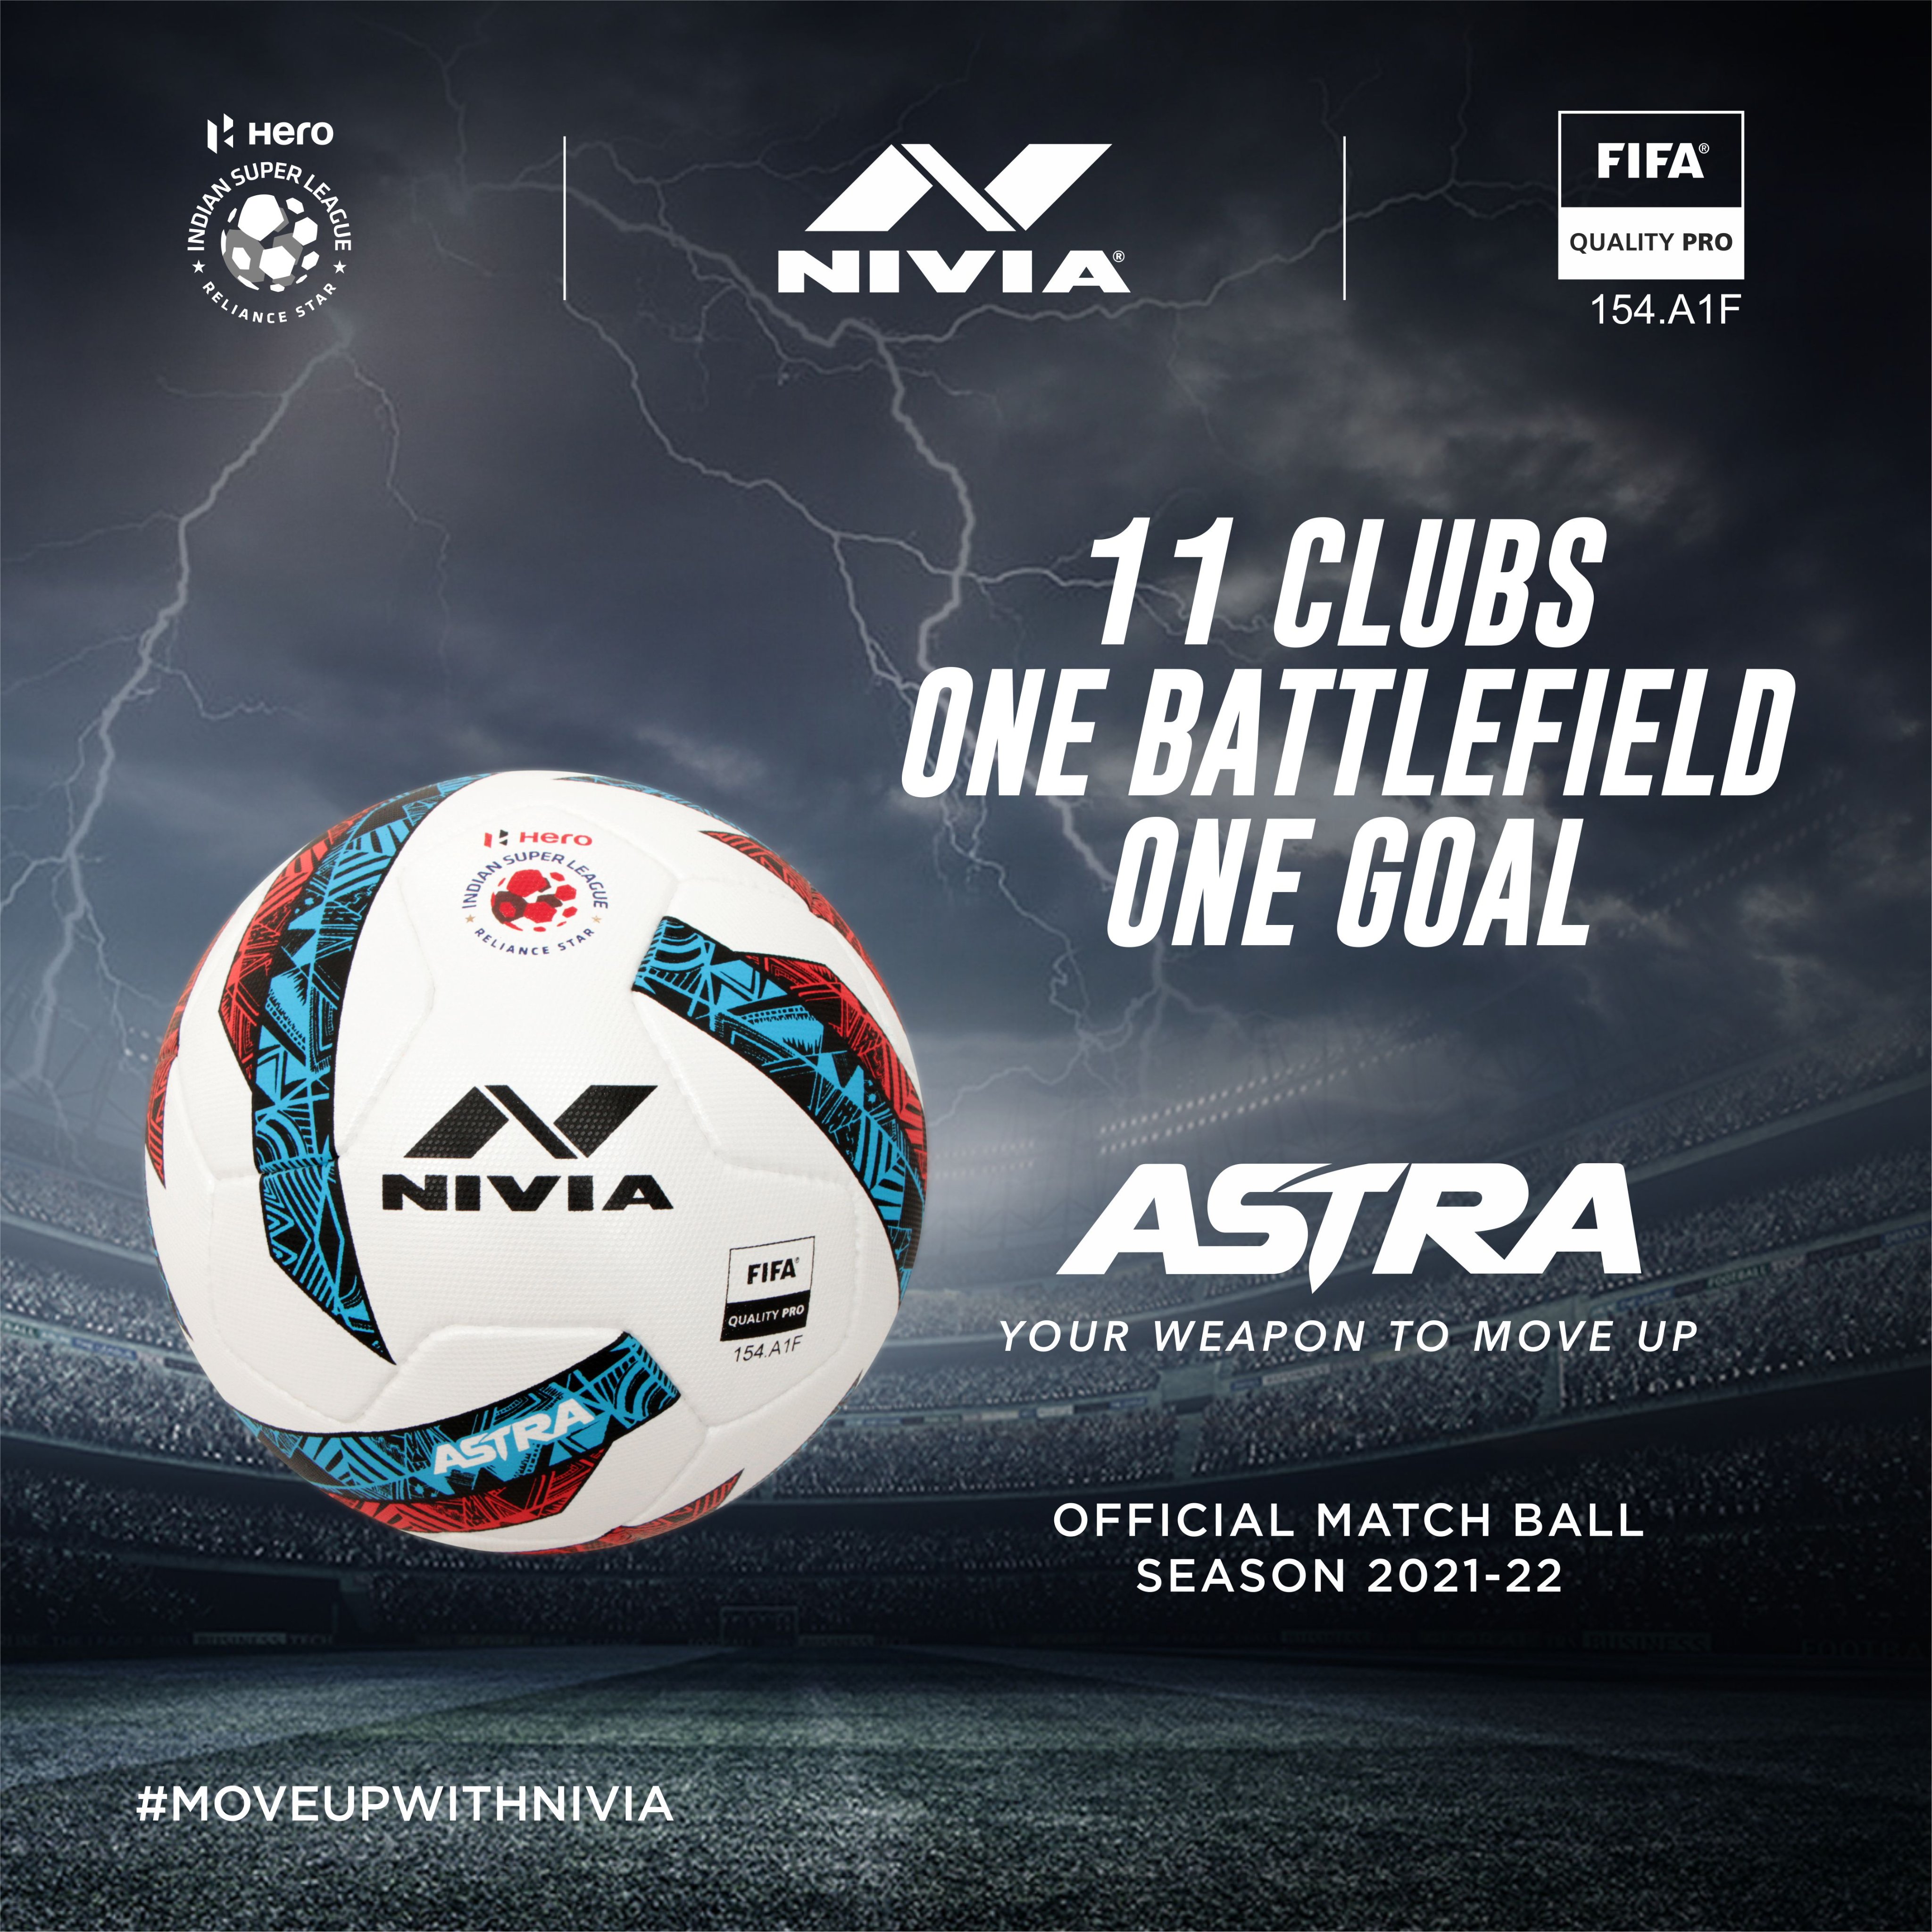 Nivia Sports on X: 11 Clubs One Battlefield One Goal @IndSuperLeague  Presenting the New official Match Ball #Nivia  Astra #MoveUpWithNivia  #StepOutAndPlay #NiviaSports  / X